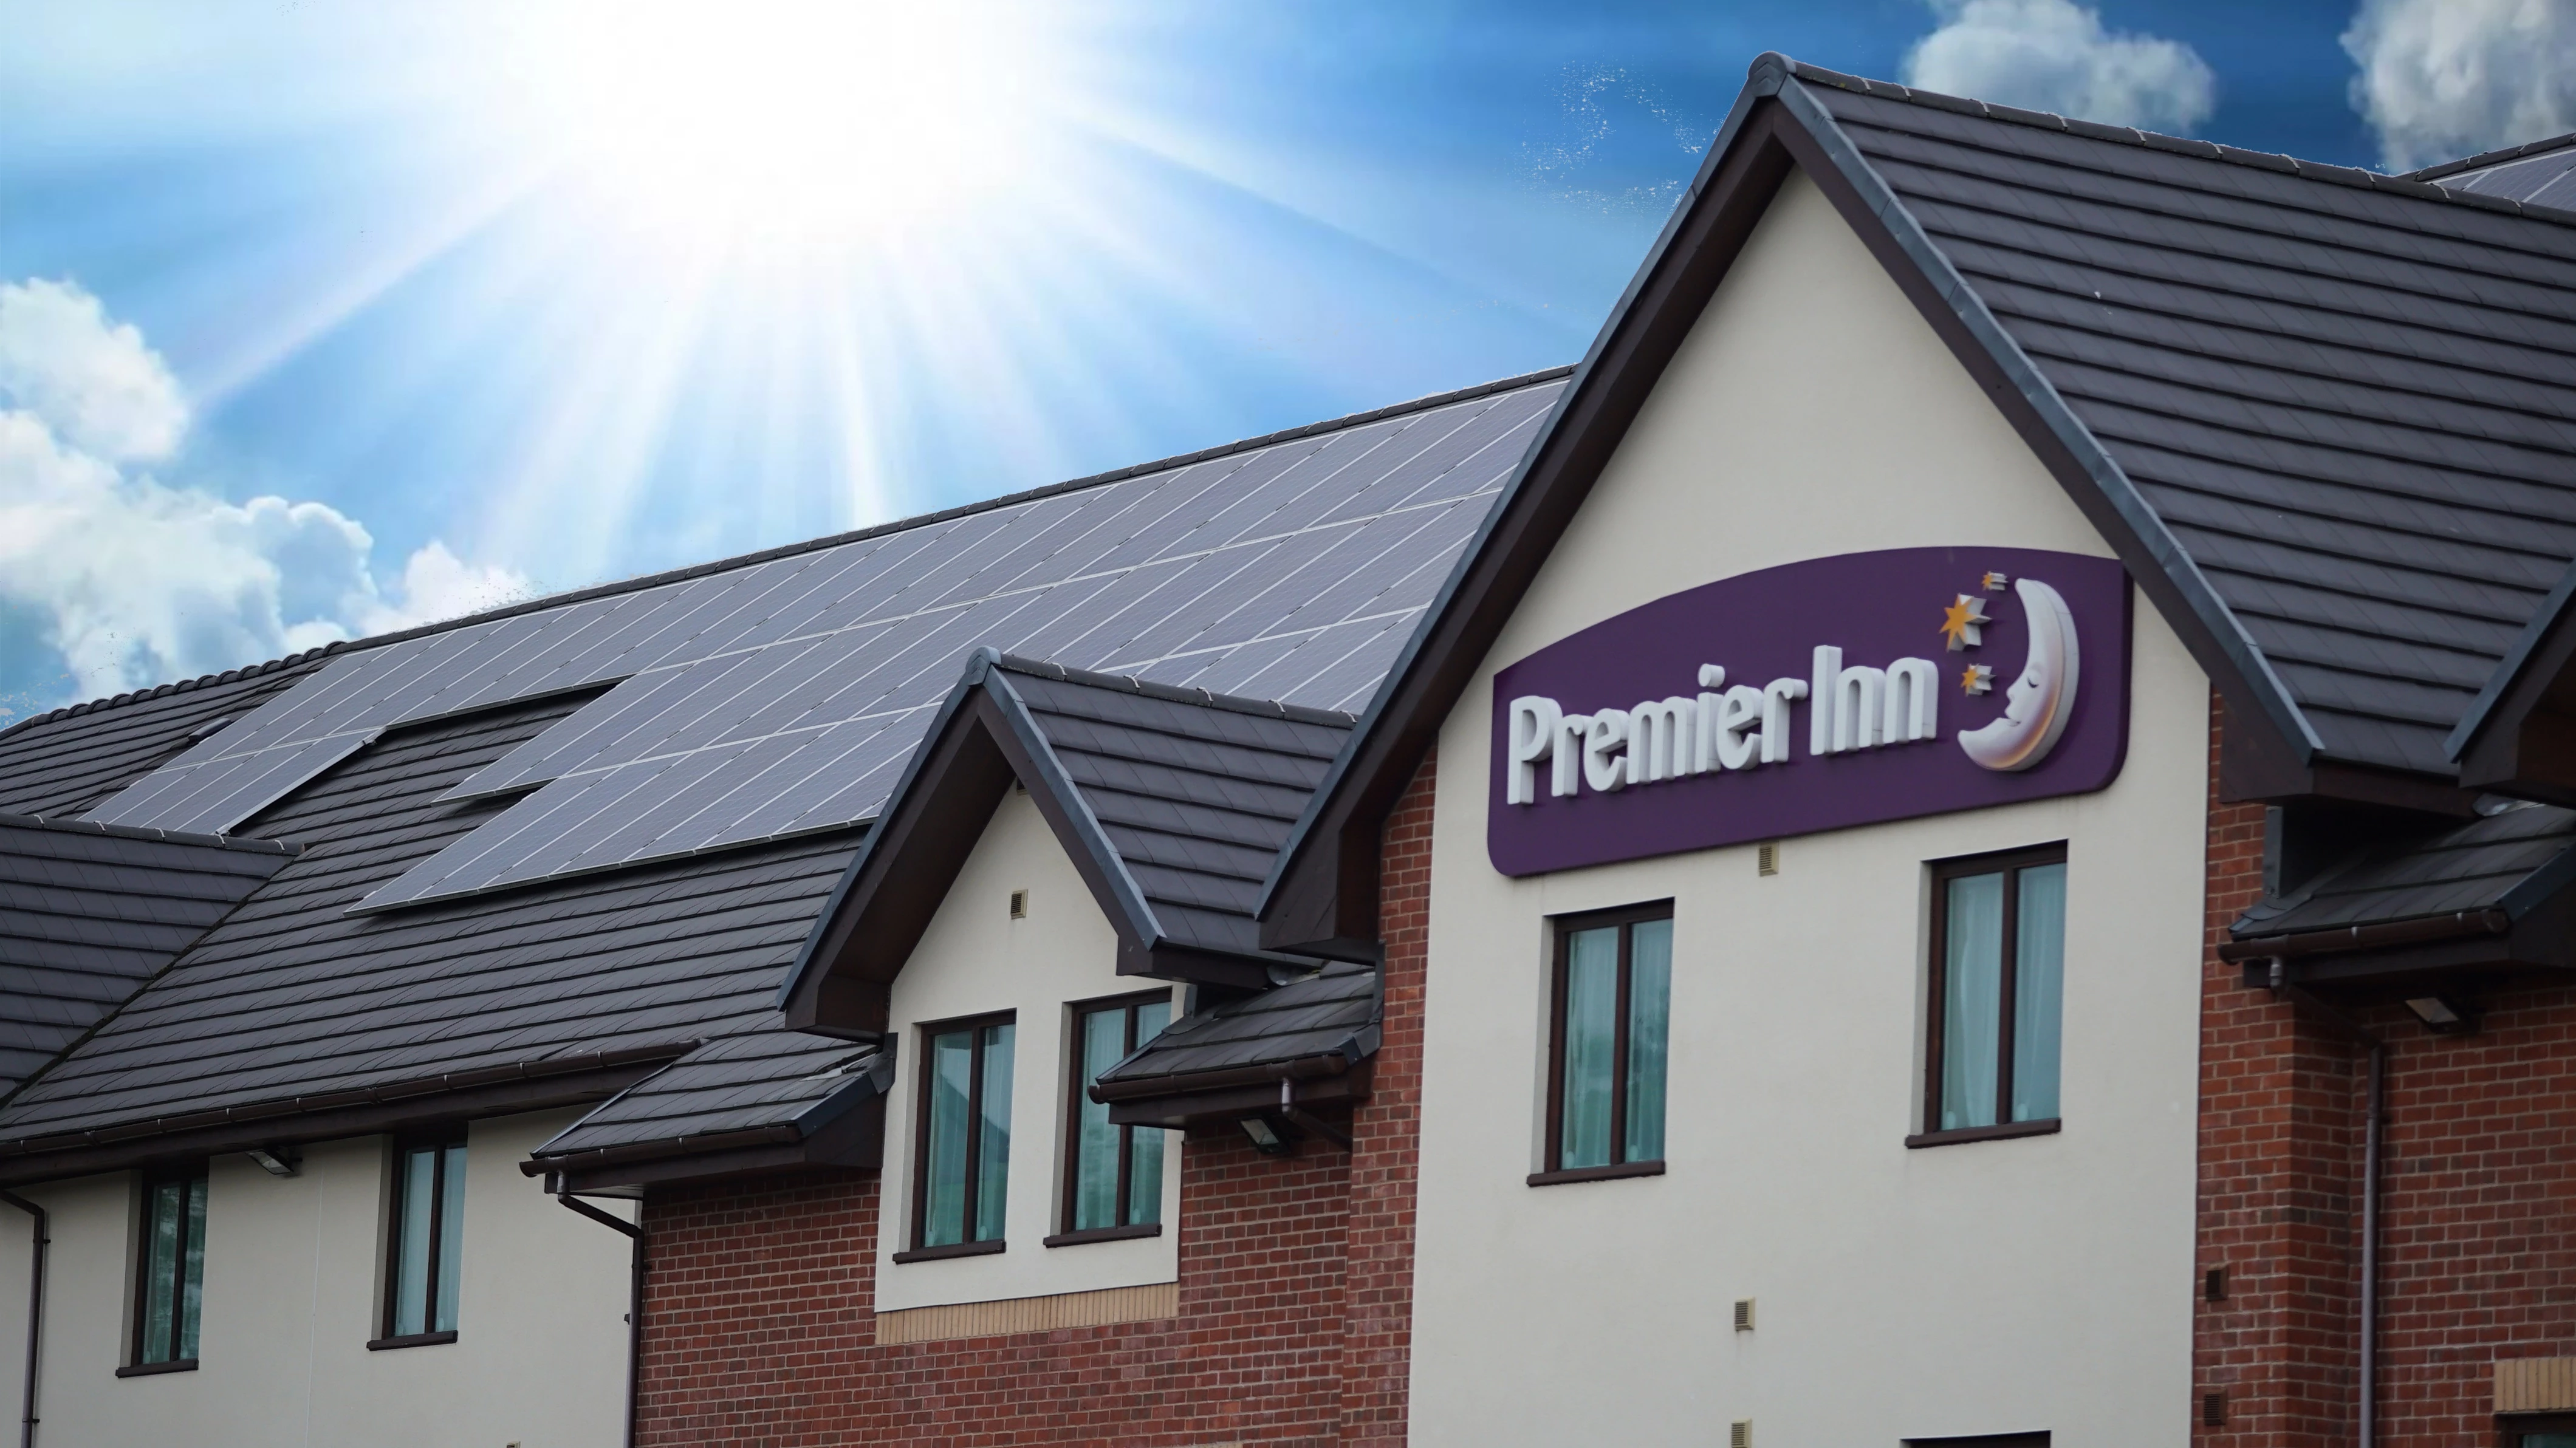 Premier Inn rooftop solar roll out